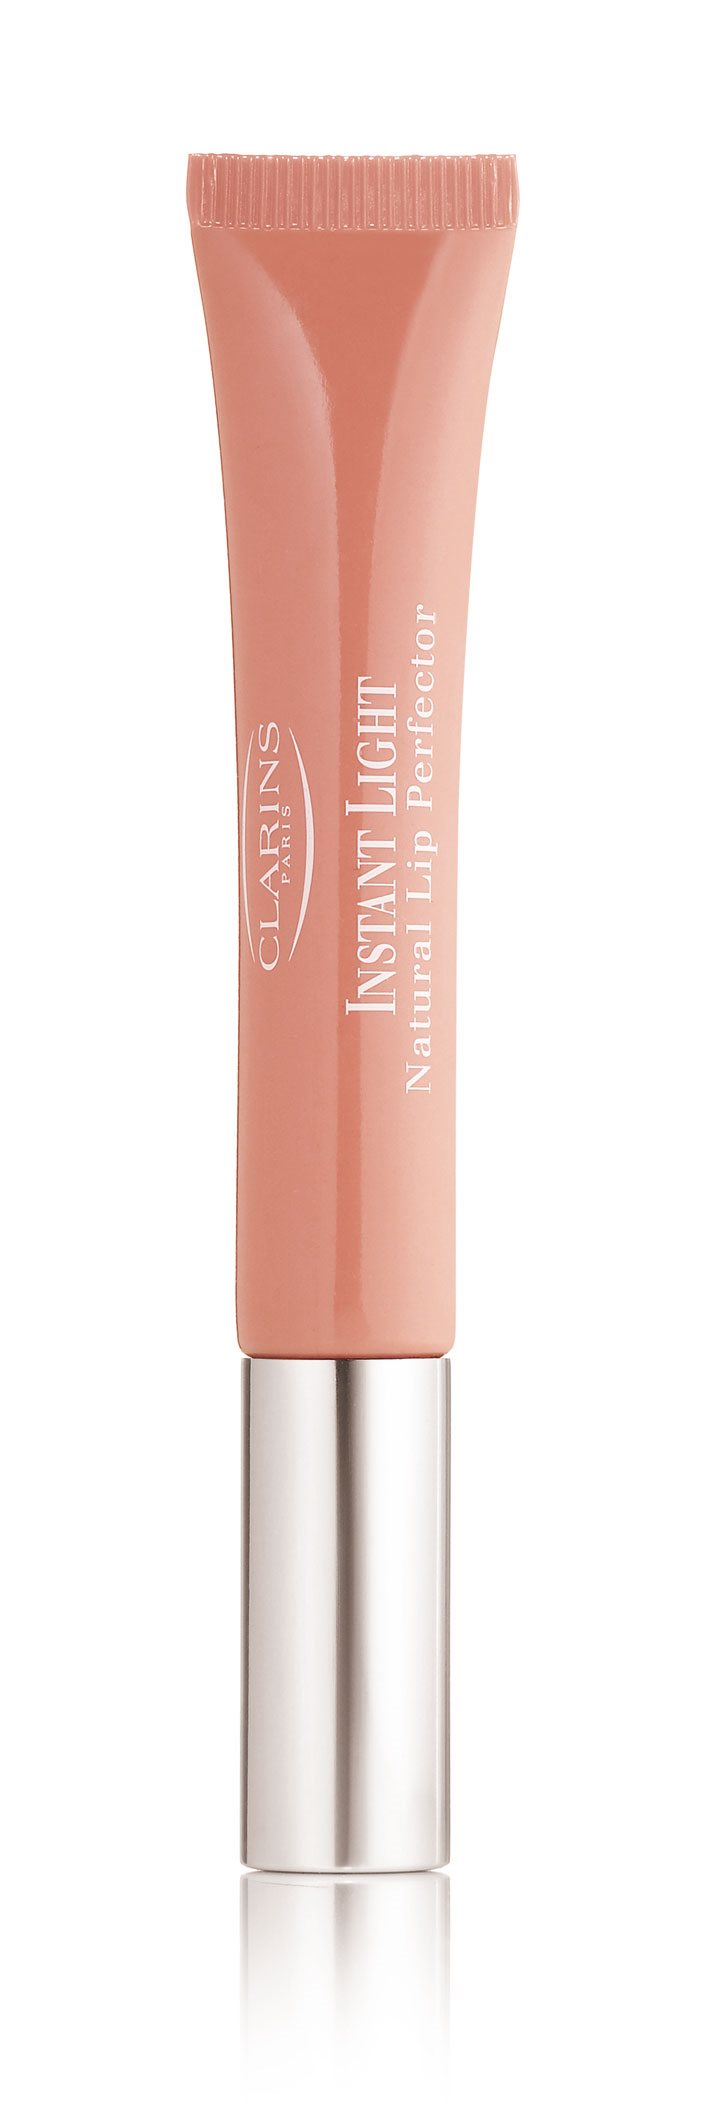 Instant Light Lip Perfector 03 Nude Shimmer